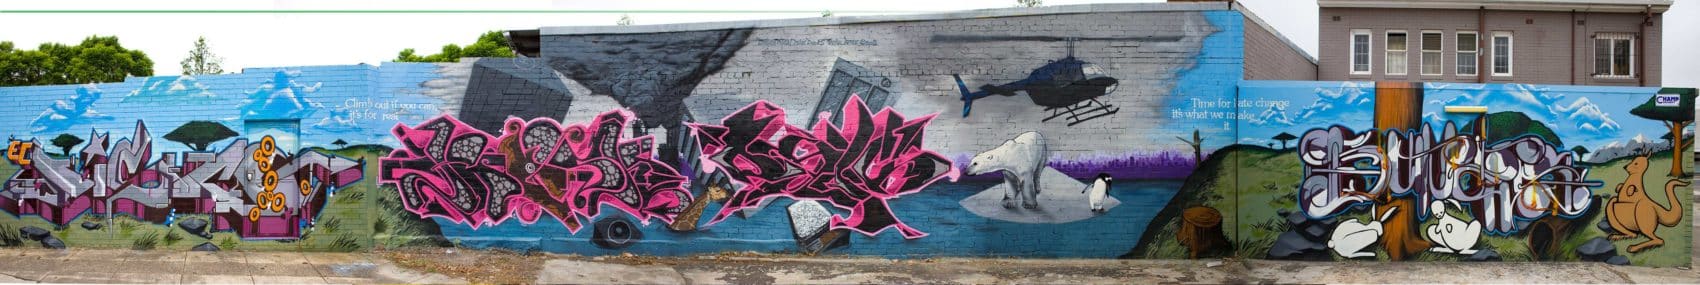 sydney graffiti production